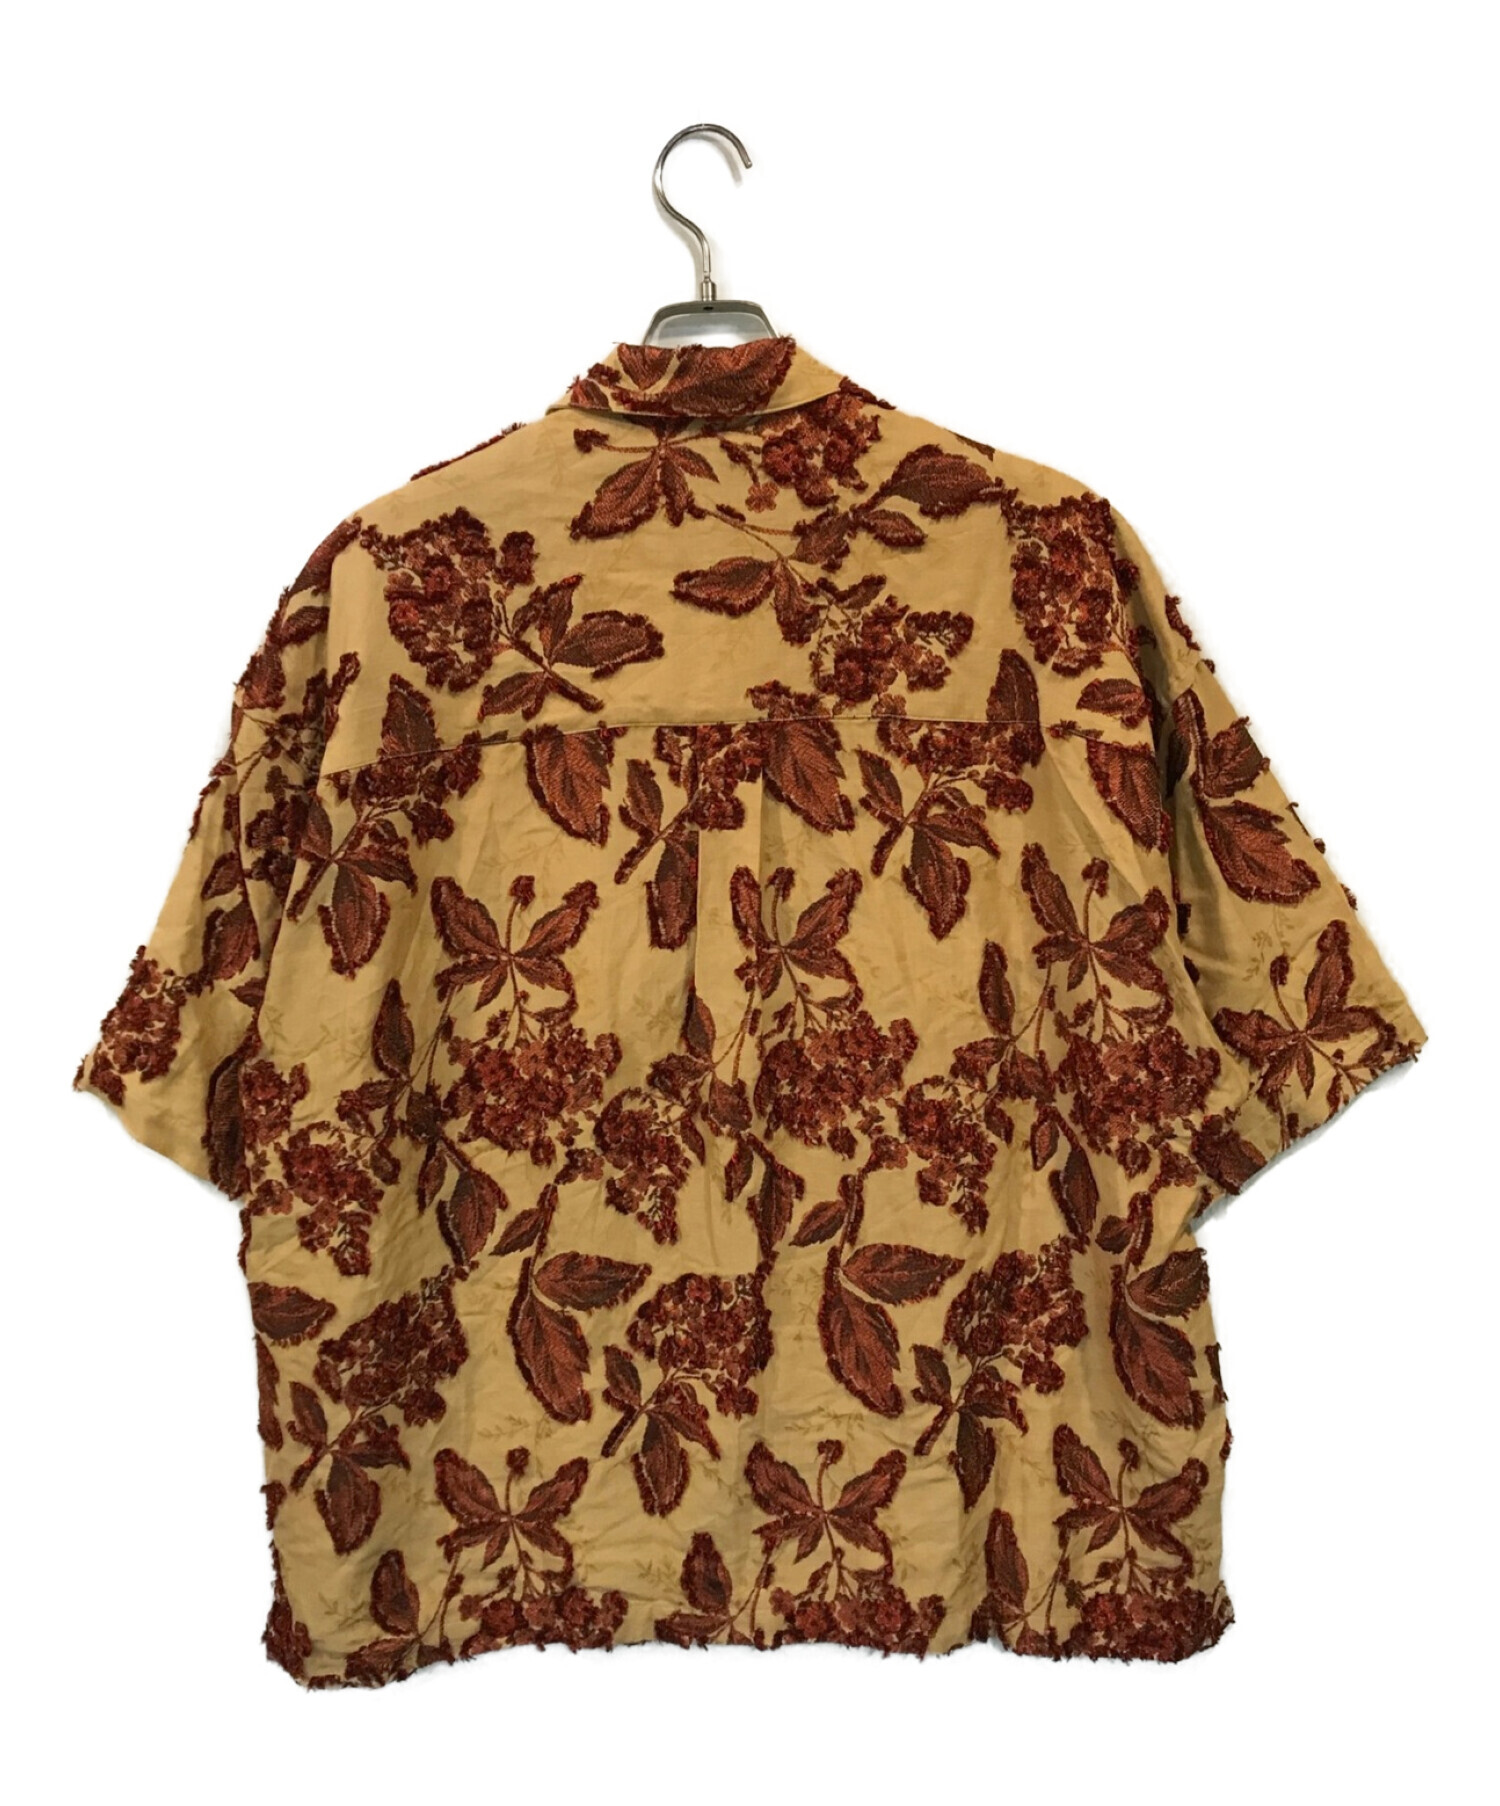 MAISON SPECIAL (メゾンスペシャル) カットオフリーフジャガードプライムオーバーオープンカラーシャツ ベージュ サイズ:size00